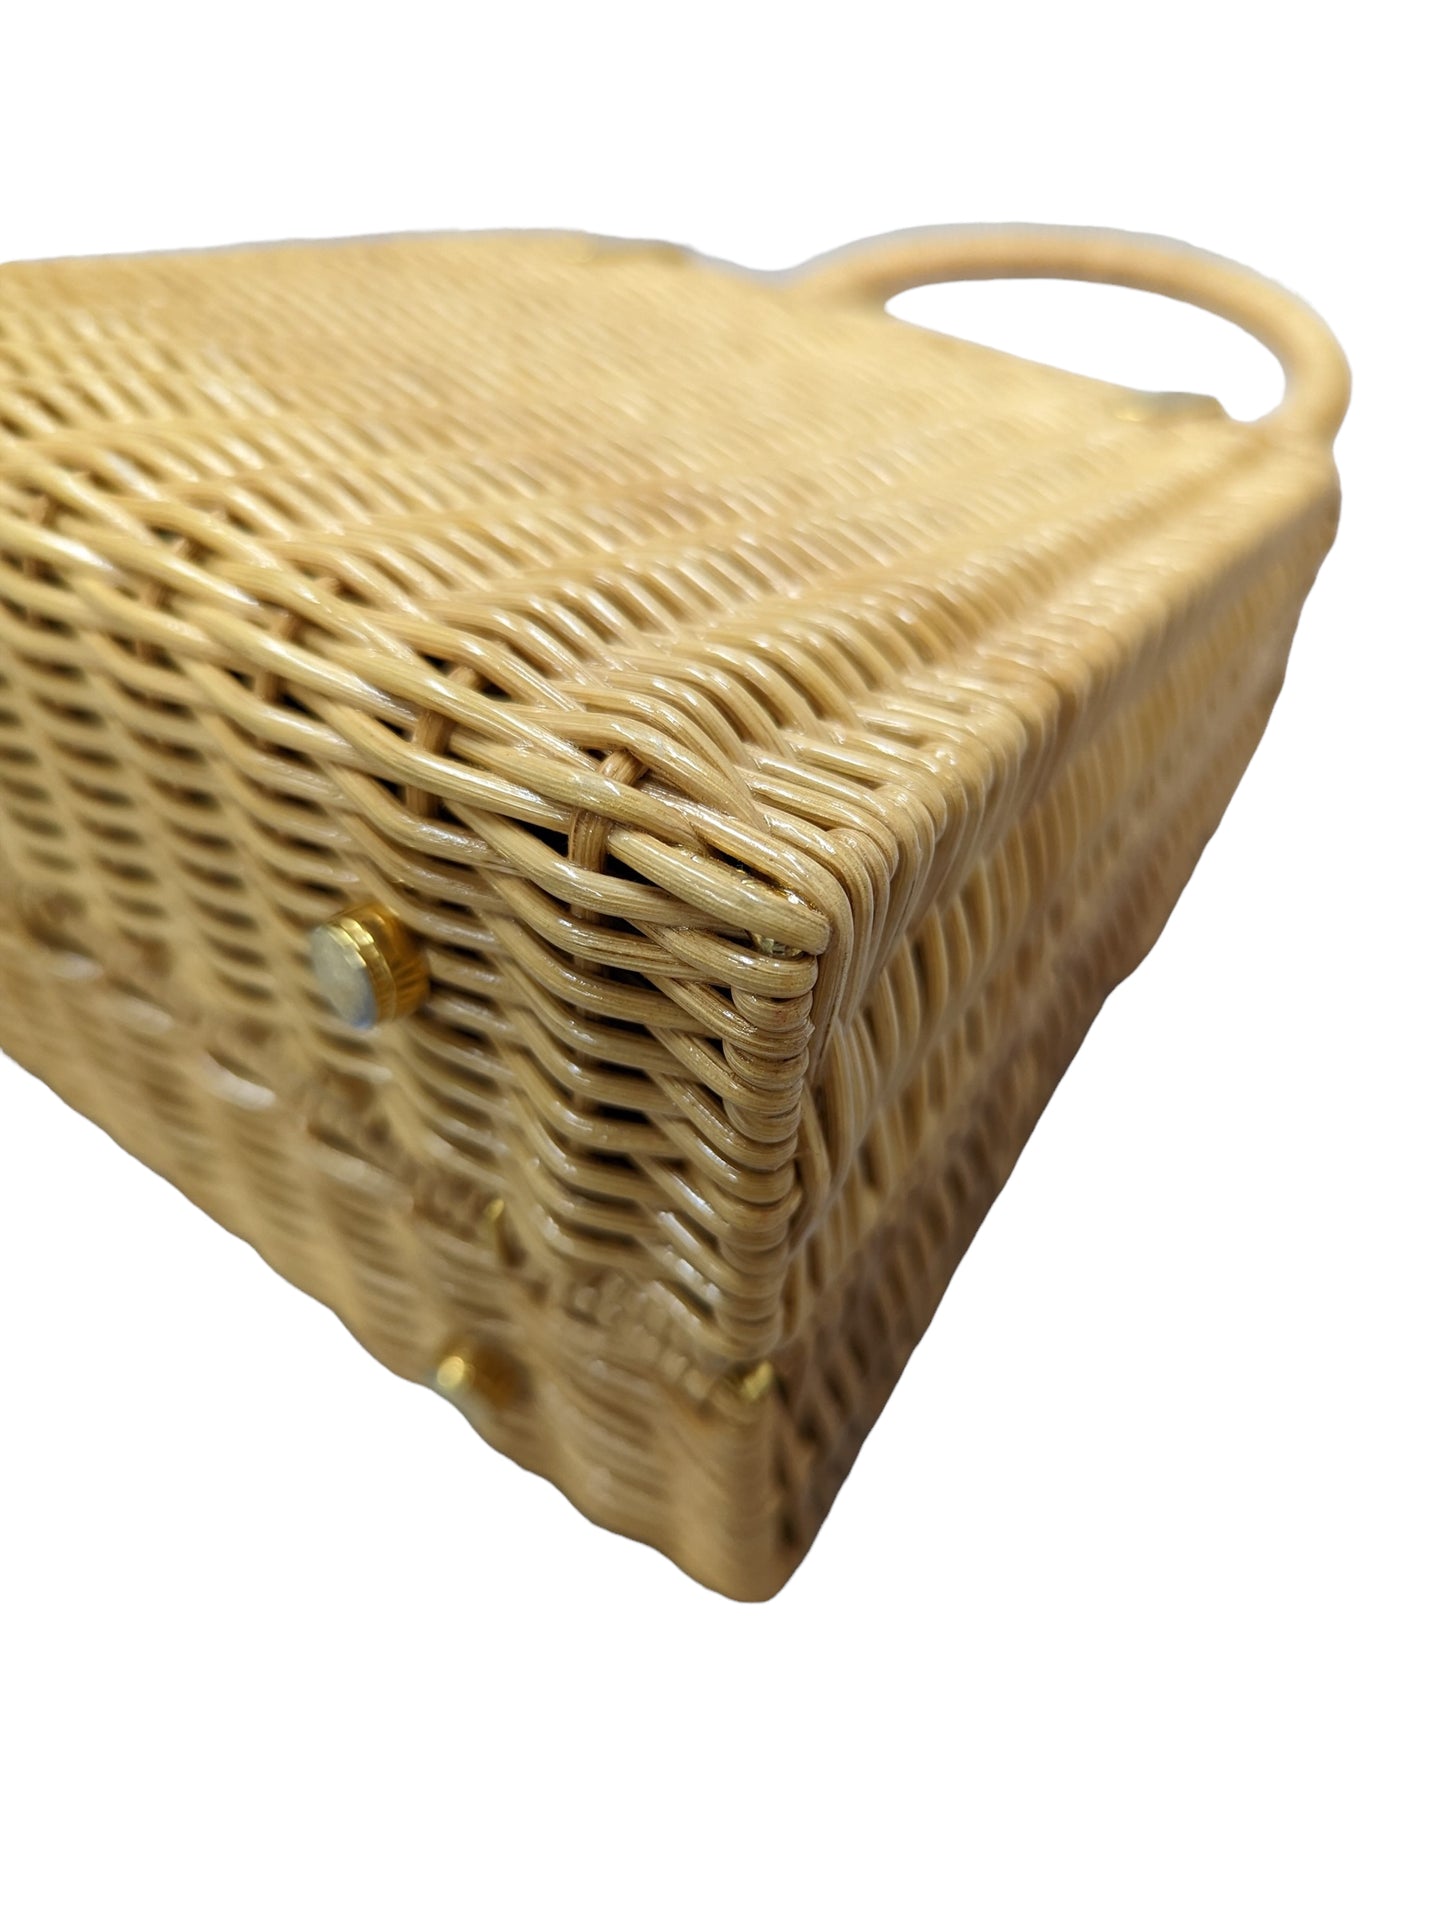 Salvatore Ferragamo  basket Gancini Straw bag Hand Brown Leather